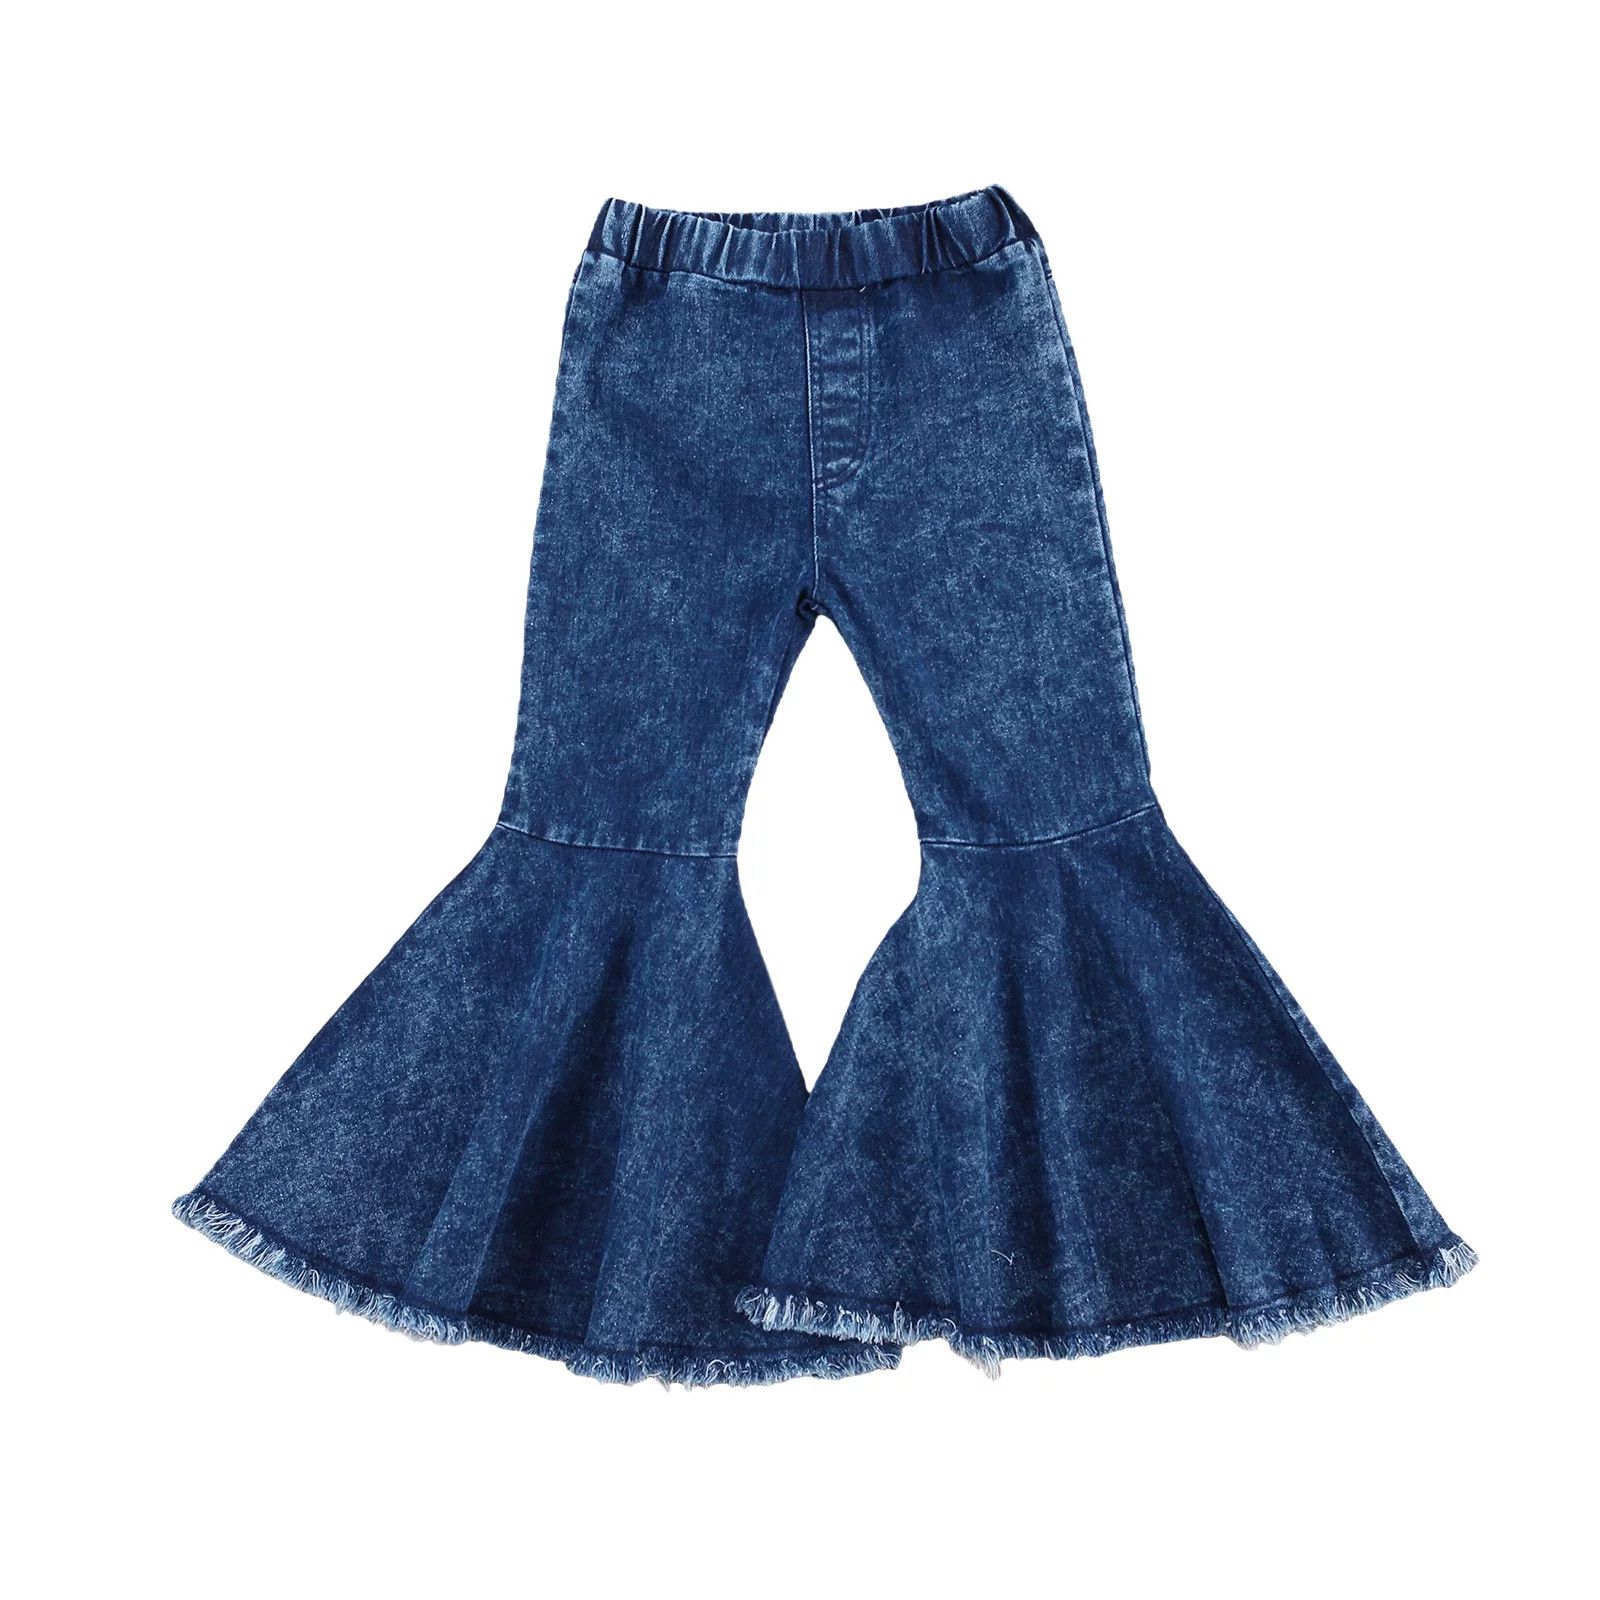 Musuos Toddler Baby Girl Flared Jeans, Blue Bell-bottom High-waist Basic Denim Pants Spring Fall ... | Walmart (US)